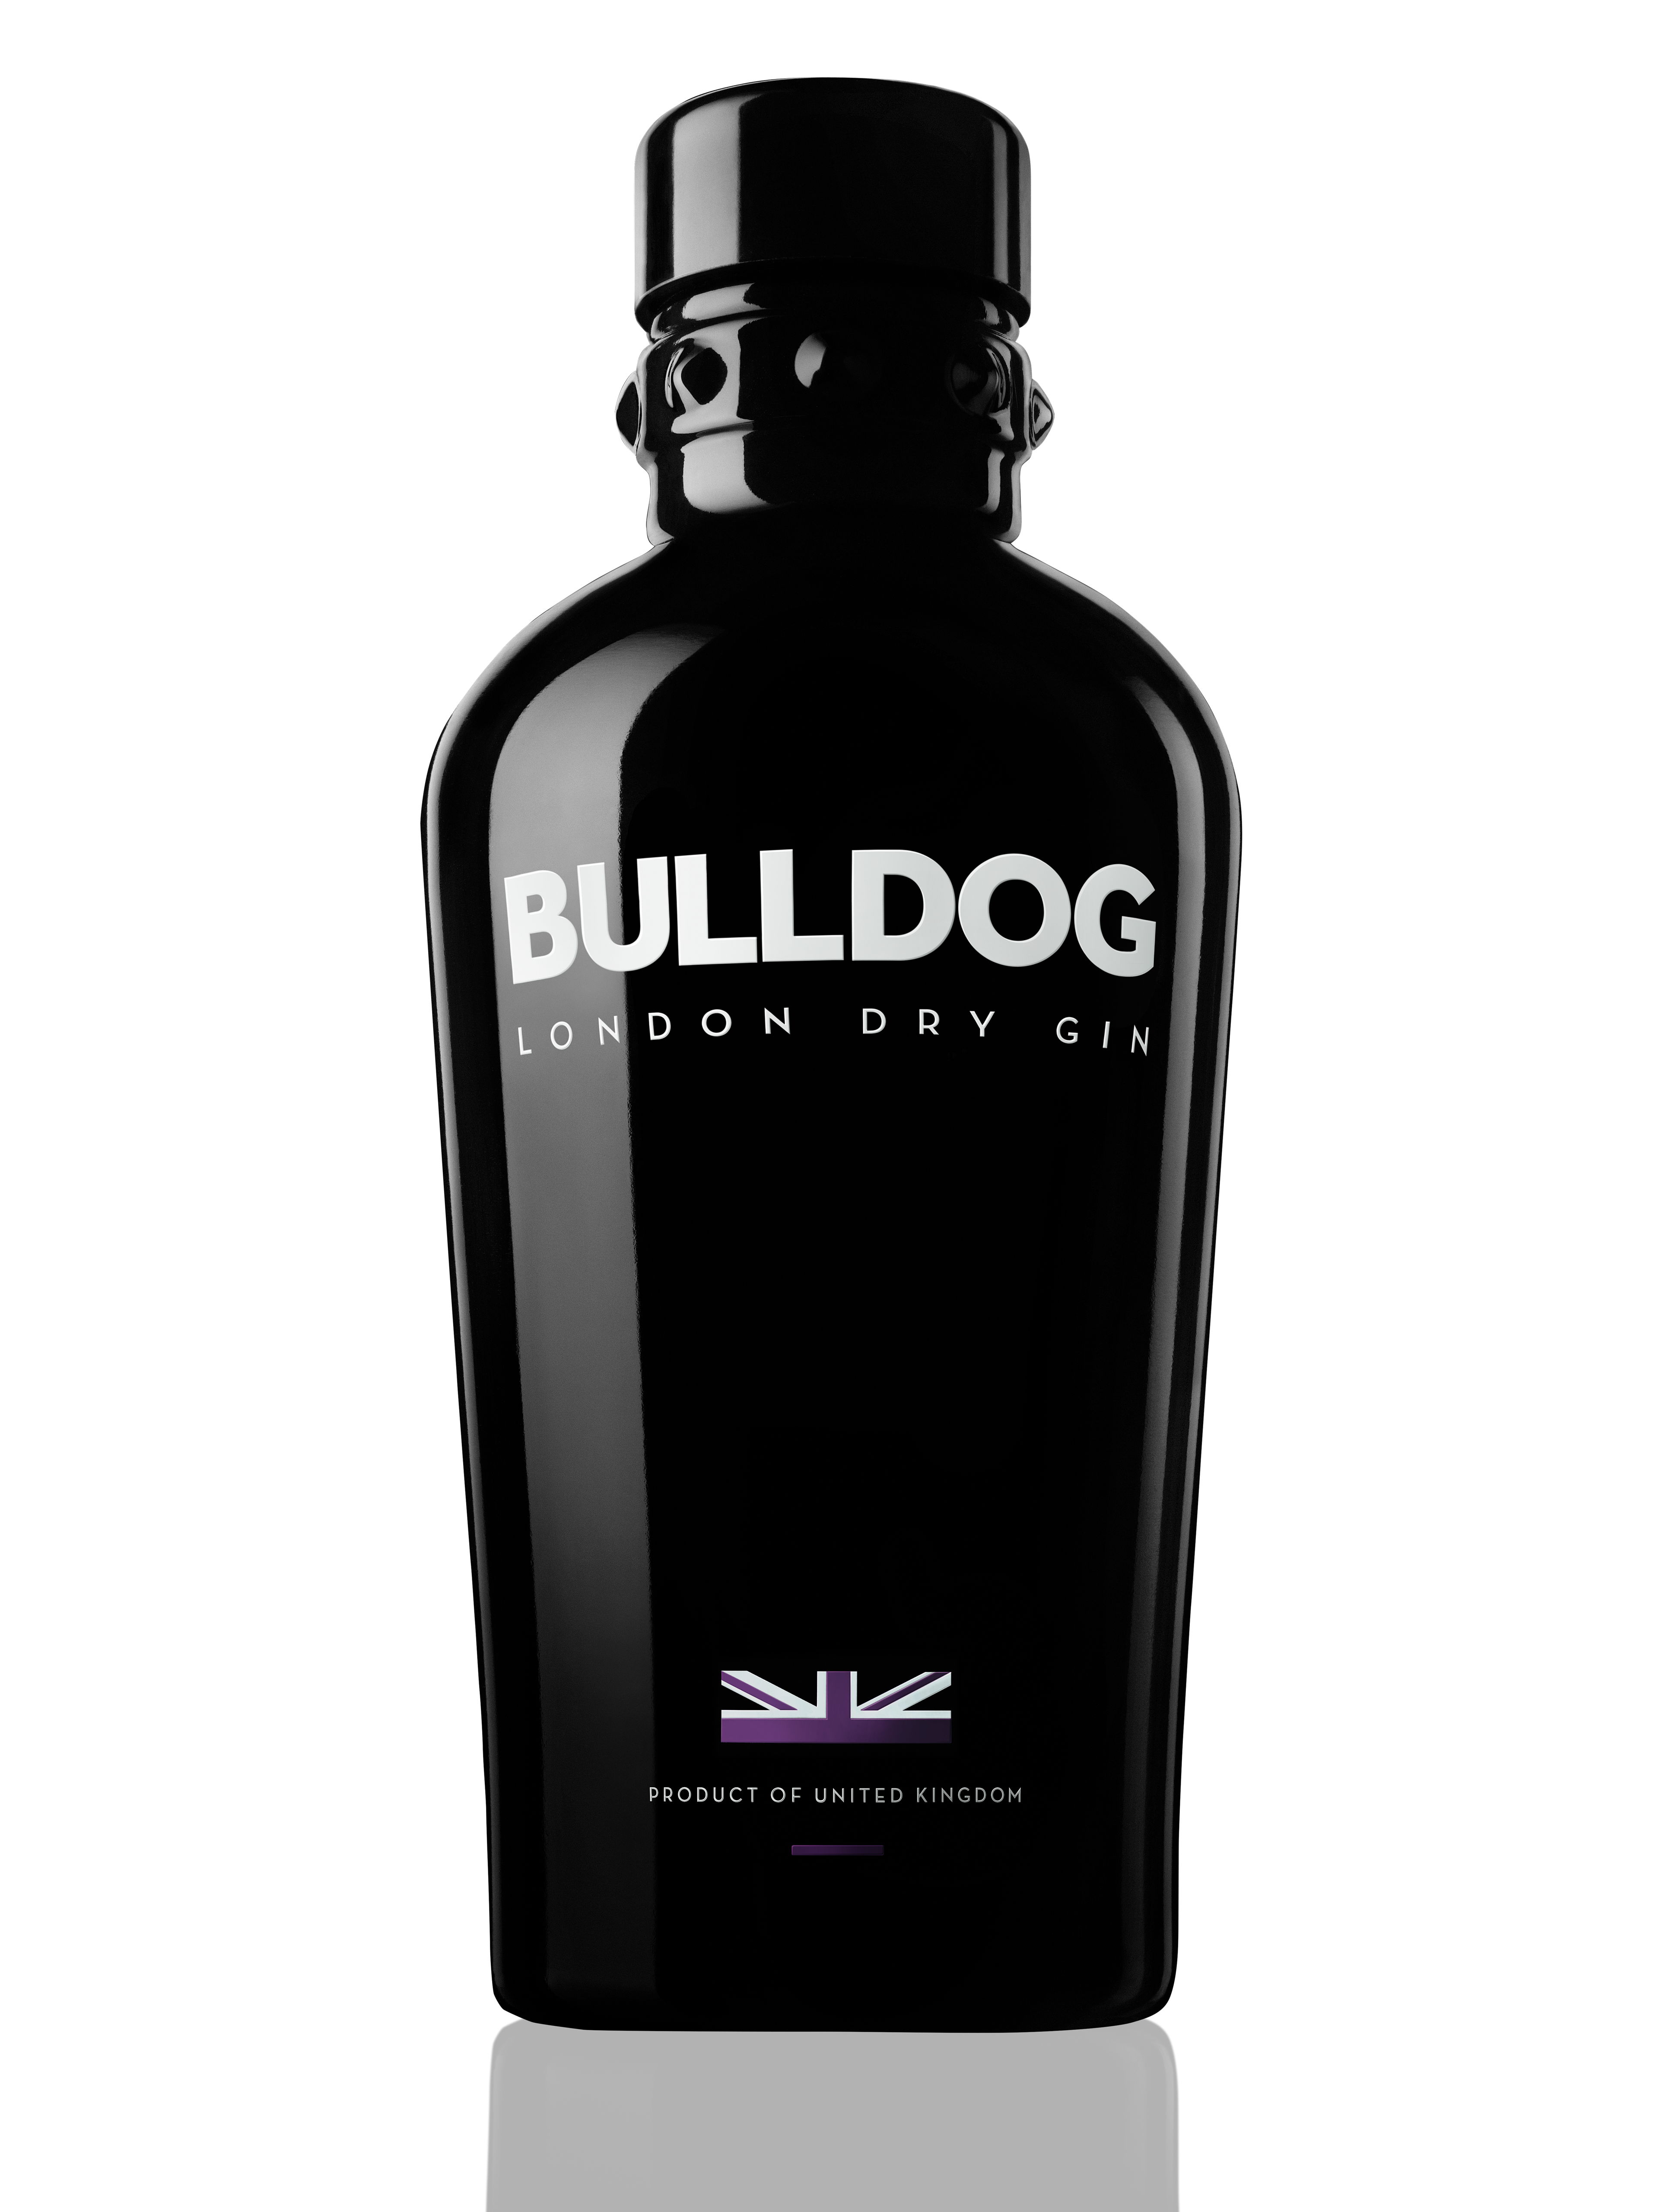 Bulldog - images